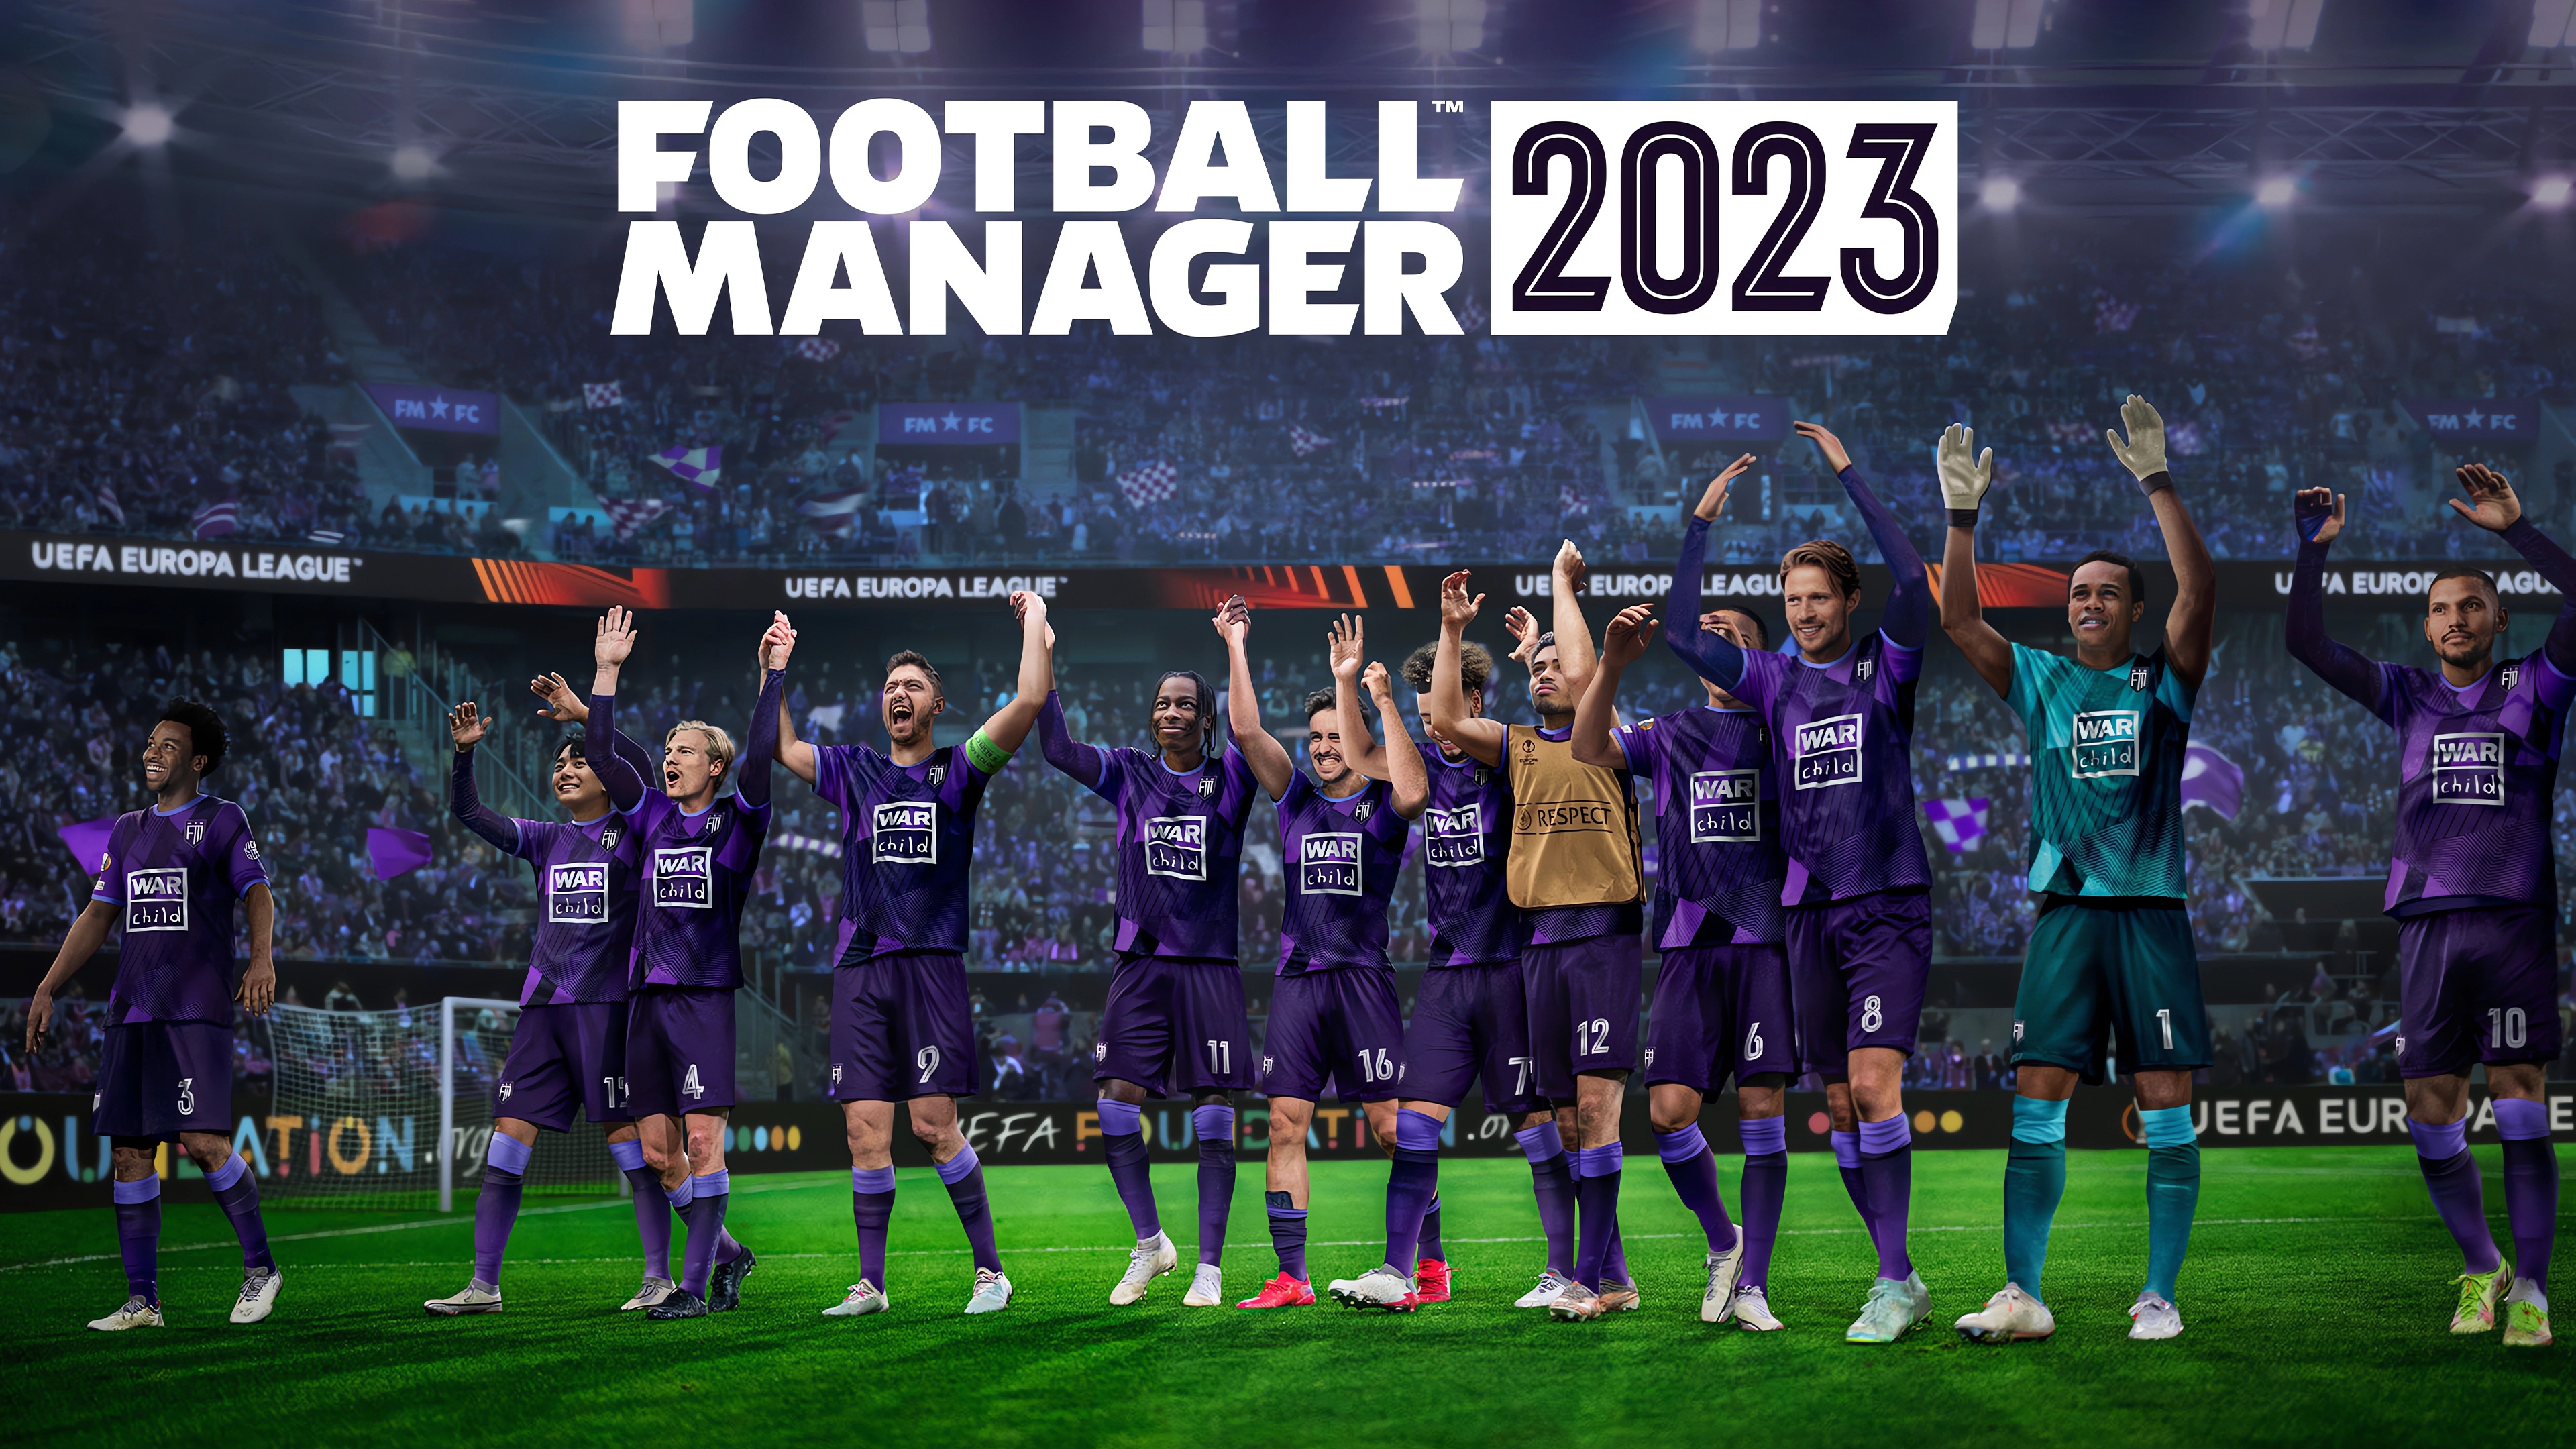 Comprar Football Manager 2023 Steam